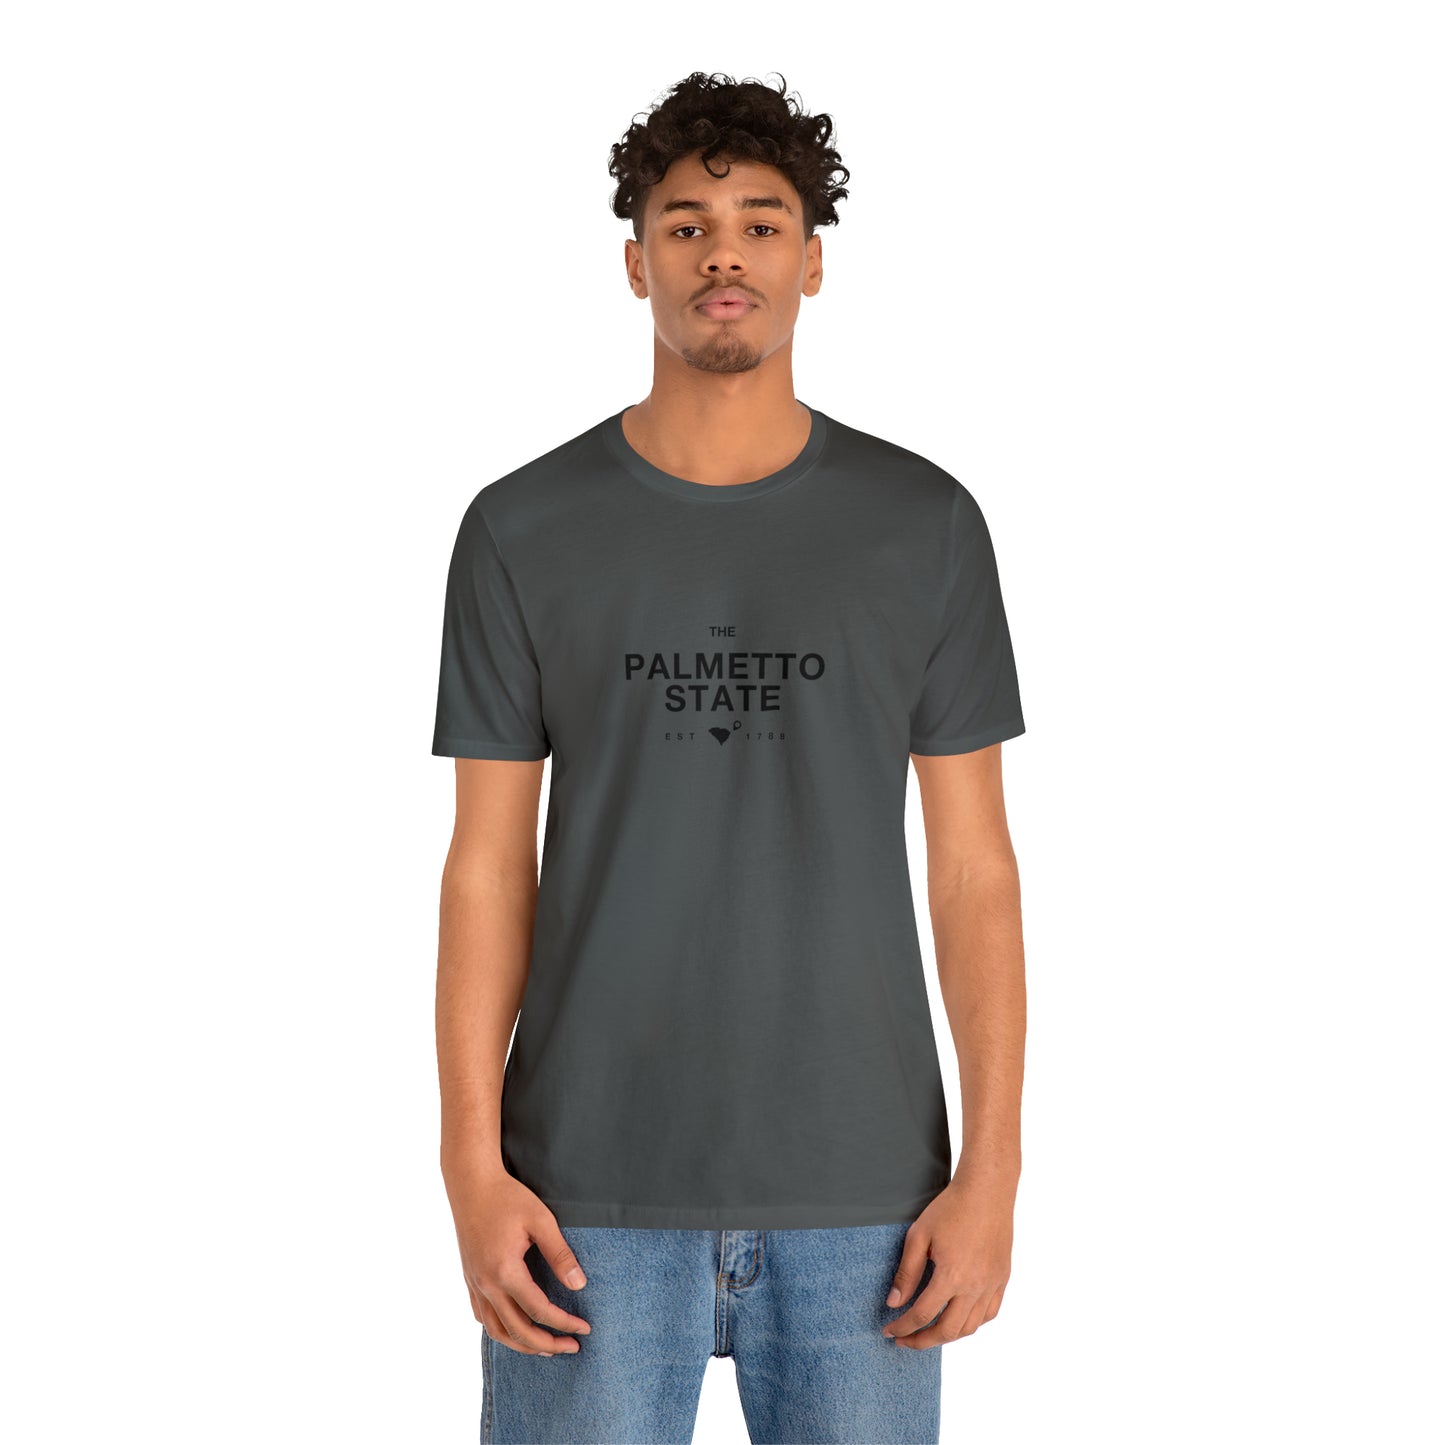 South Carolina Nickname Shirt